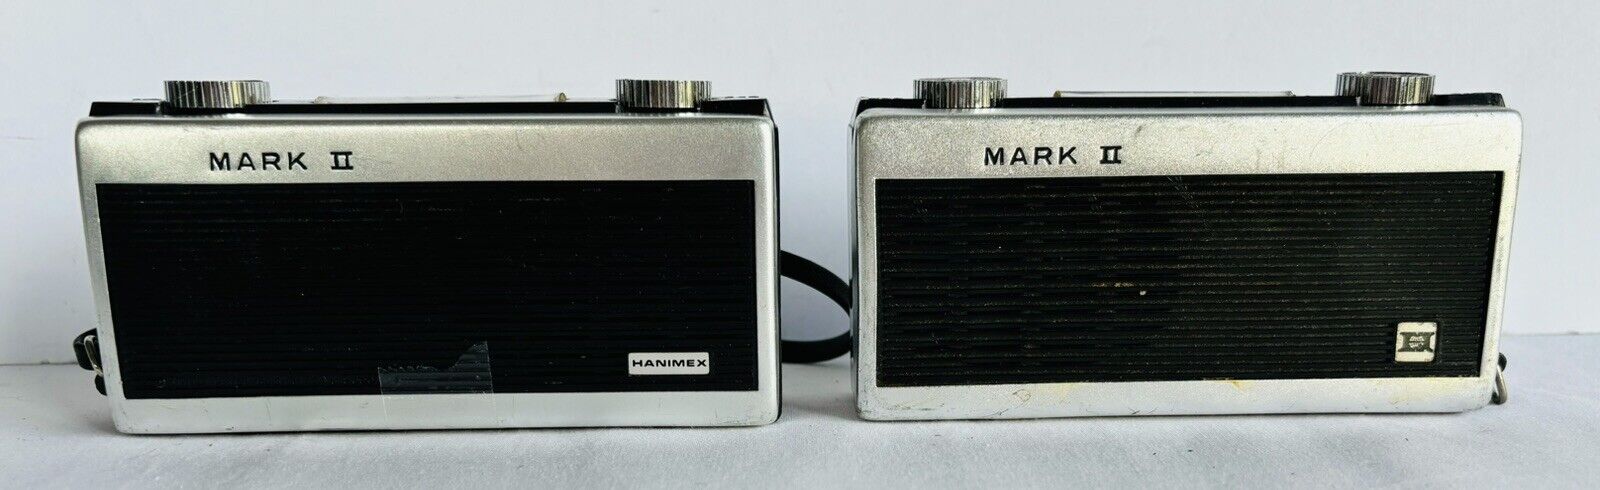 HANIMEX Mark II MW Band Mini Pocket Portable Vintage Transistor Radio x2 WORKING